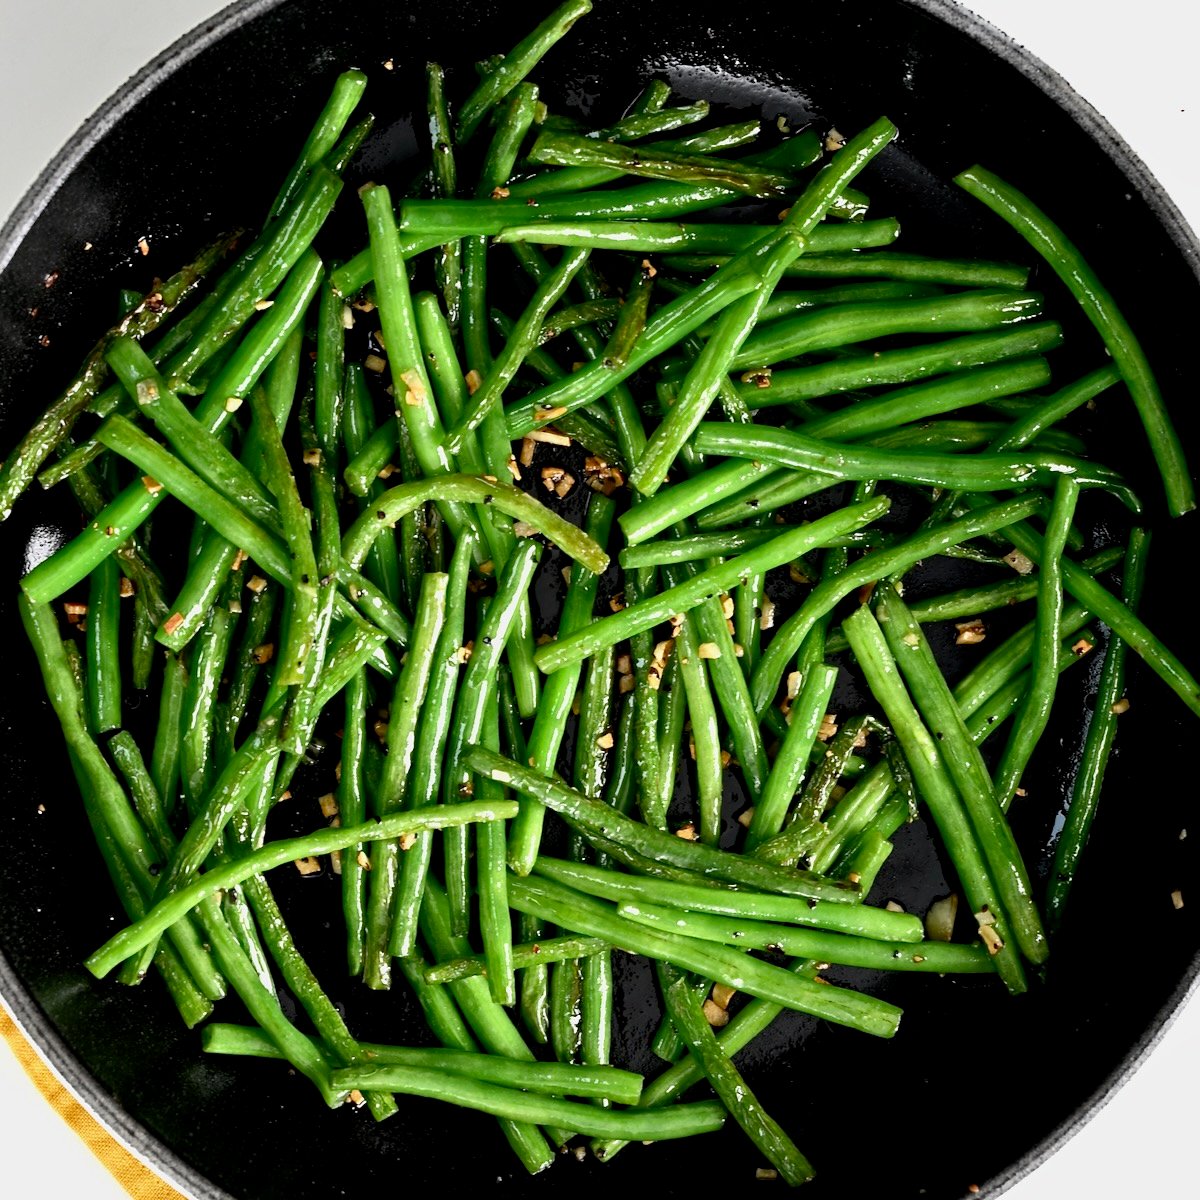 A pan with sautéed green beans